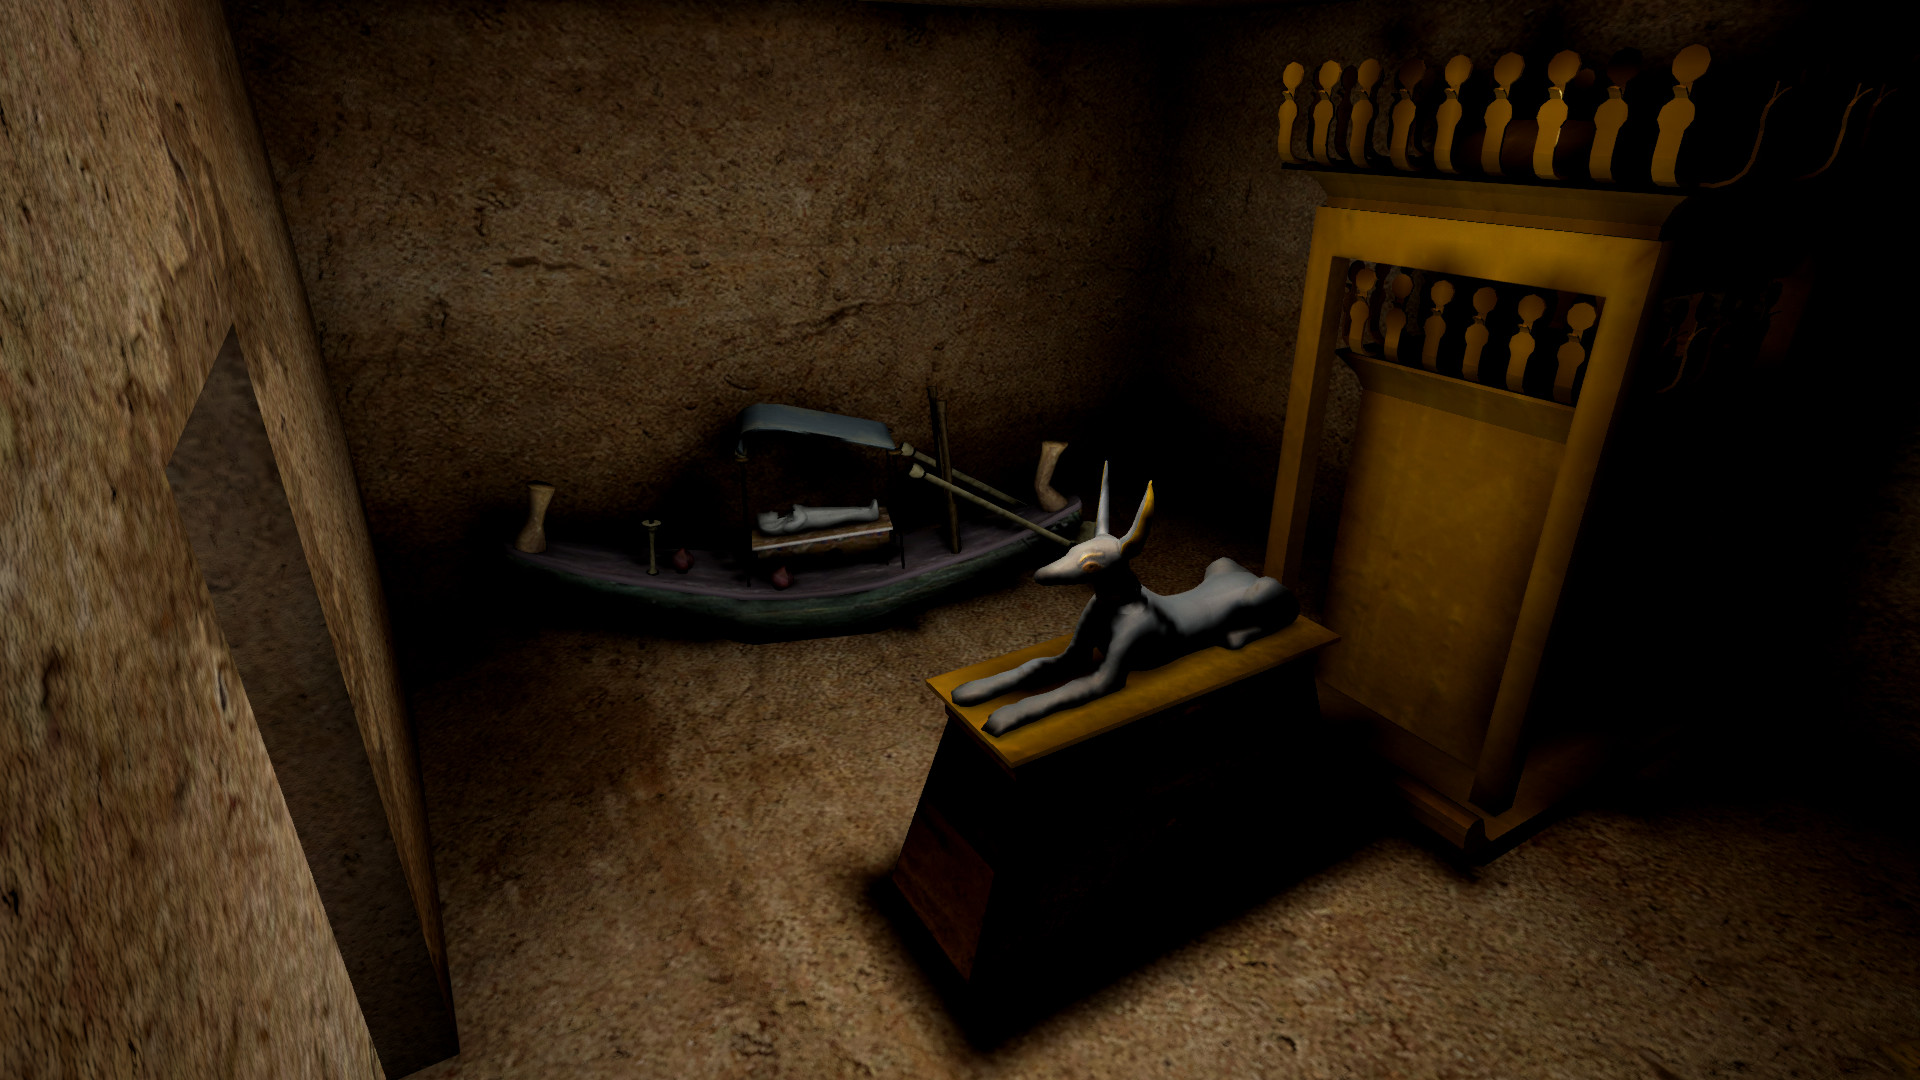 Discovr Egypt: King Tut's Tomb screenshot